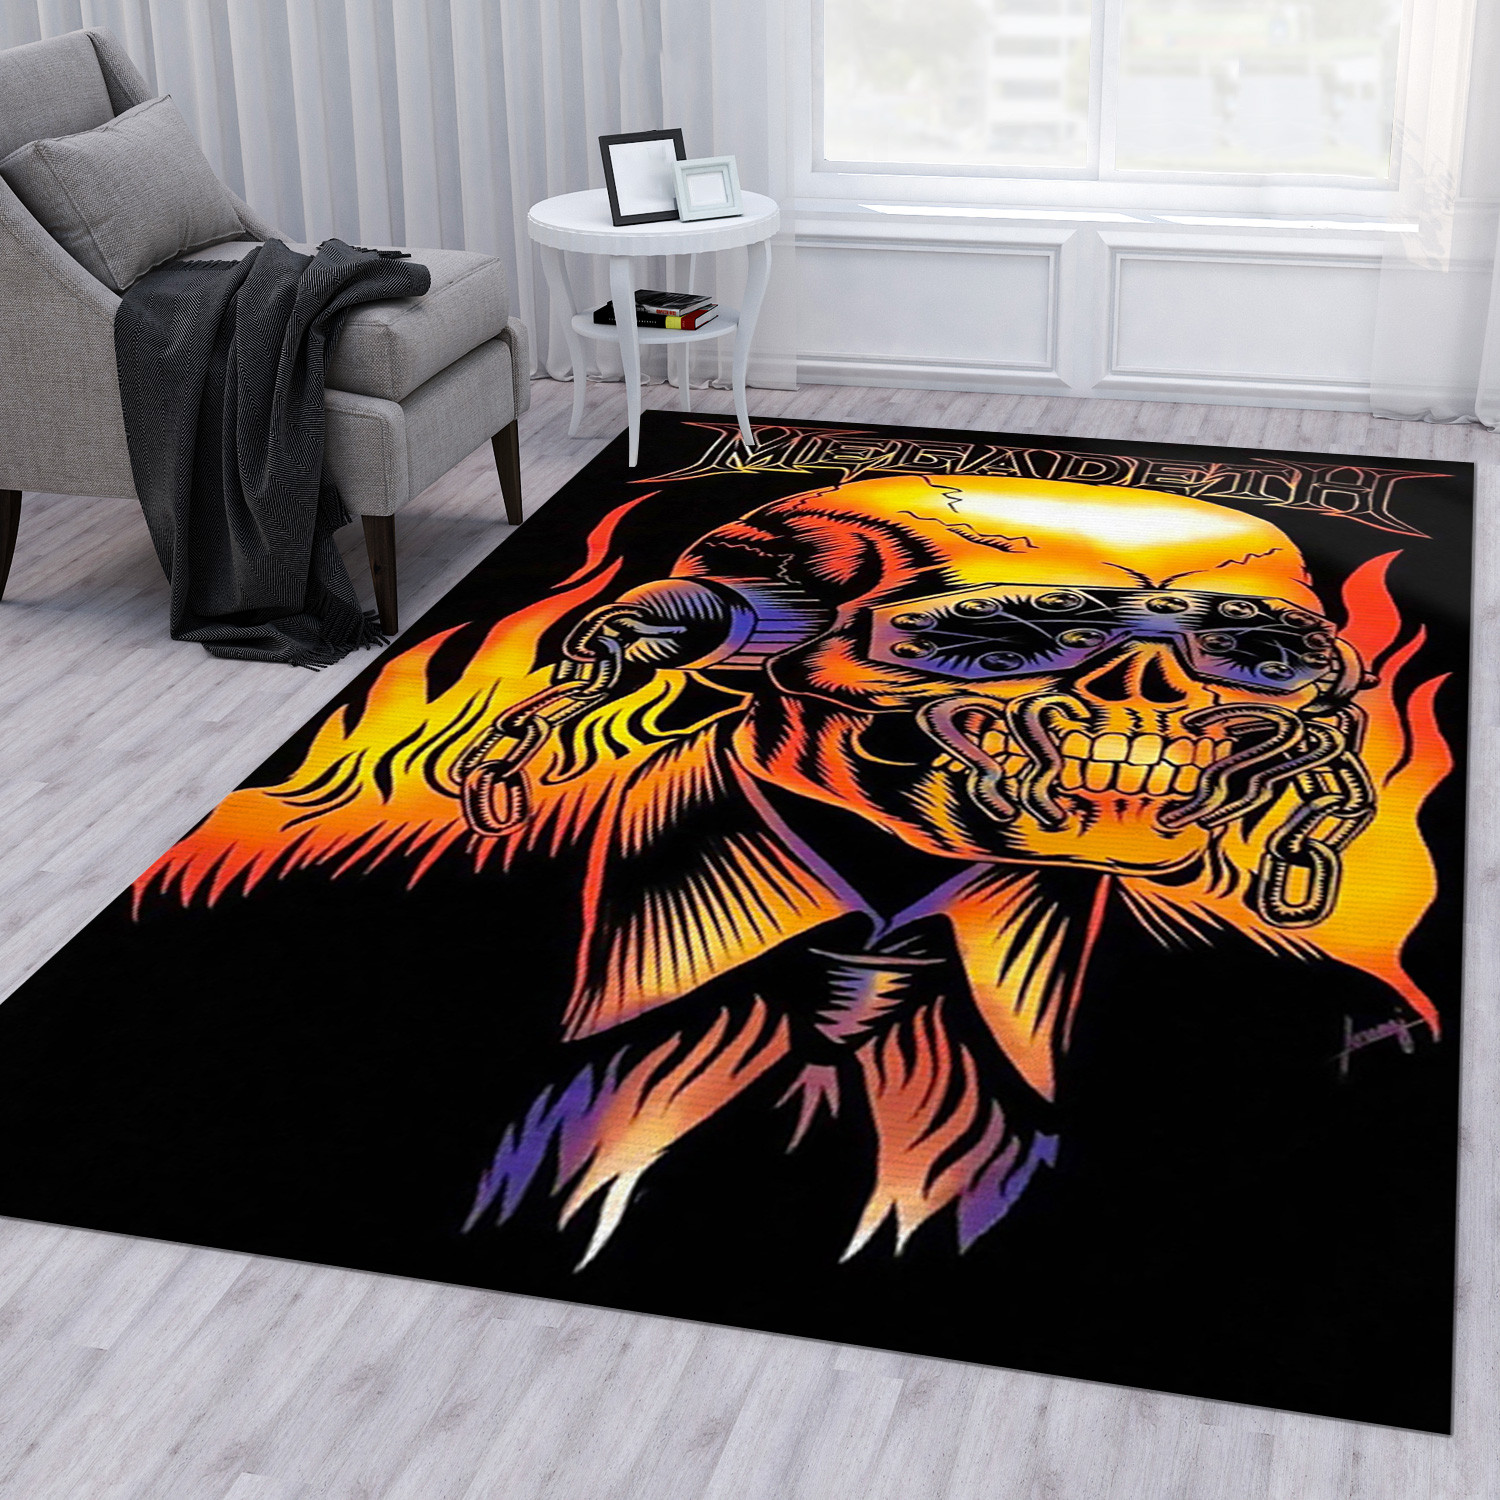 Megadeth Band Area Rug Music Floor Decor Carpet Titles 3